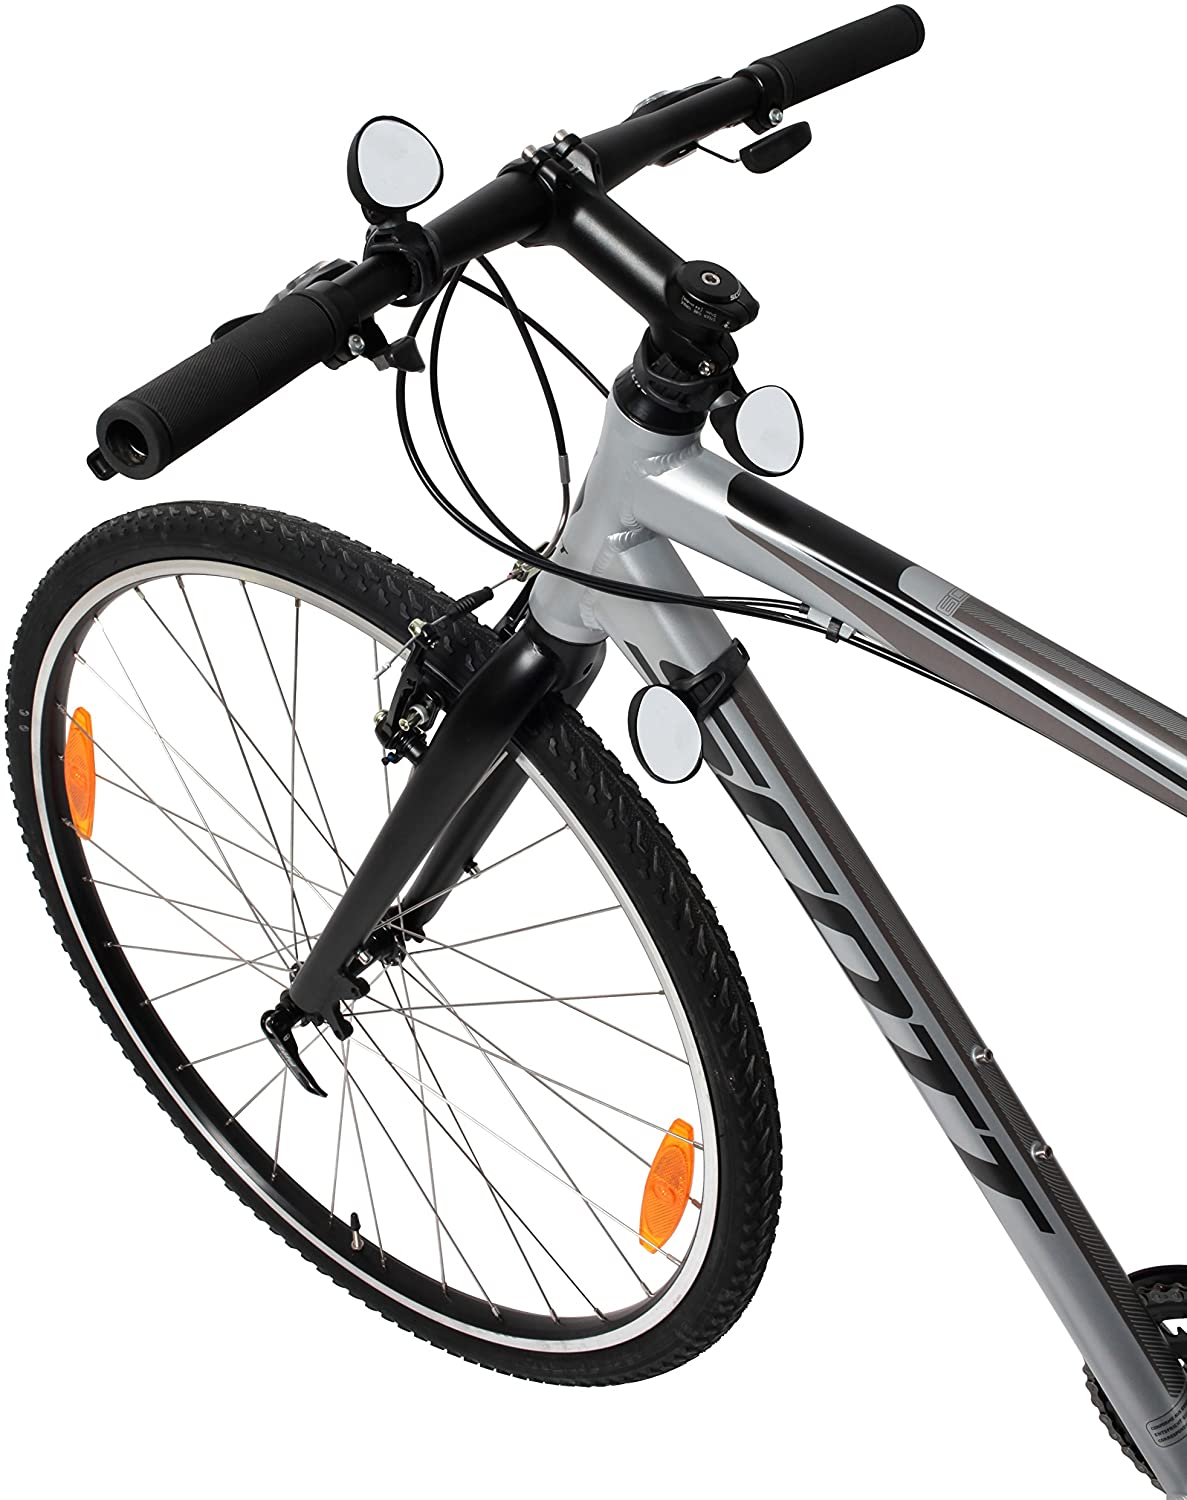 Zefal Spy Bicycle Mirror Black-Bicycle Mirrors-Zefal-Chain Driven Cycles-Bike Shop-Ireland